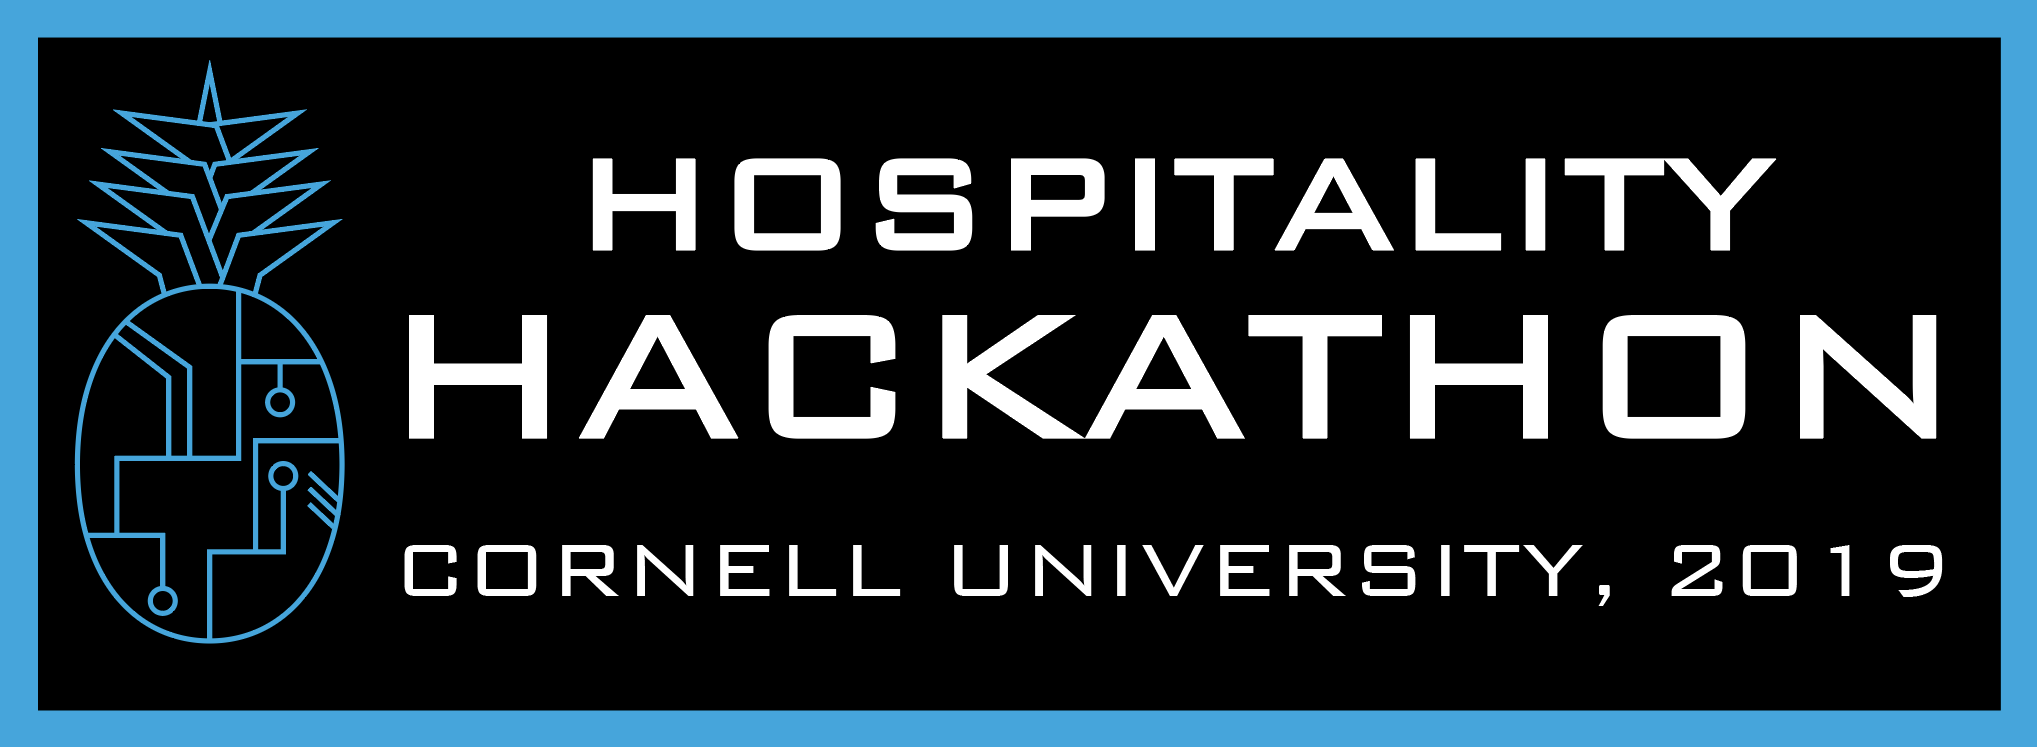 Hospitality Hackathon banner